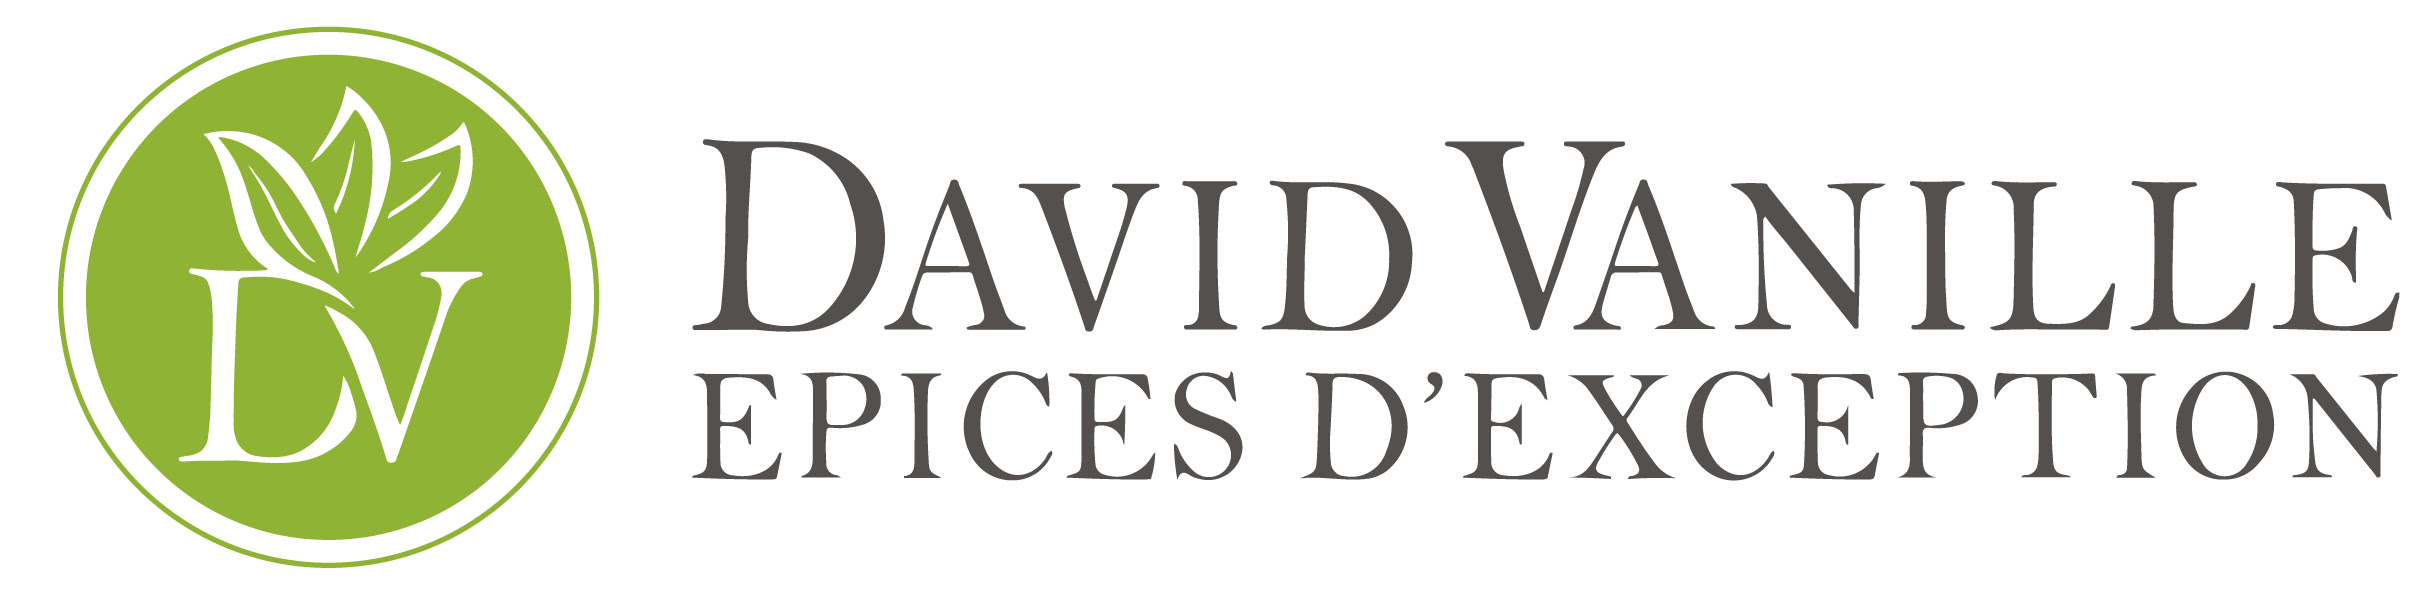 DAVID VANILLE